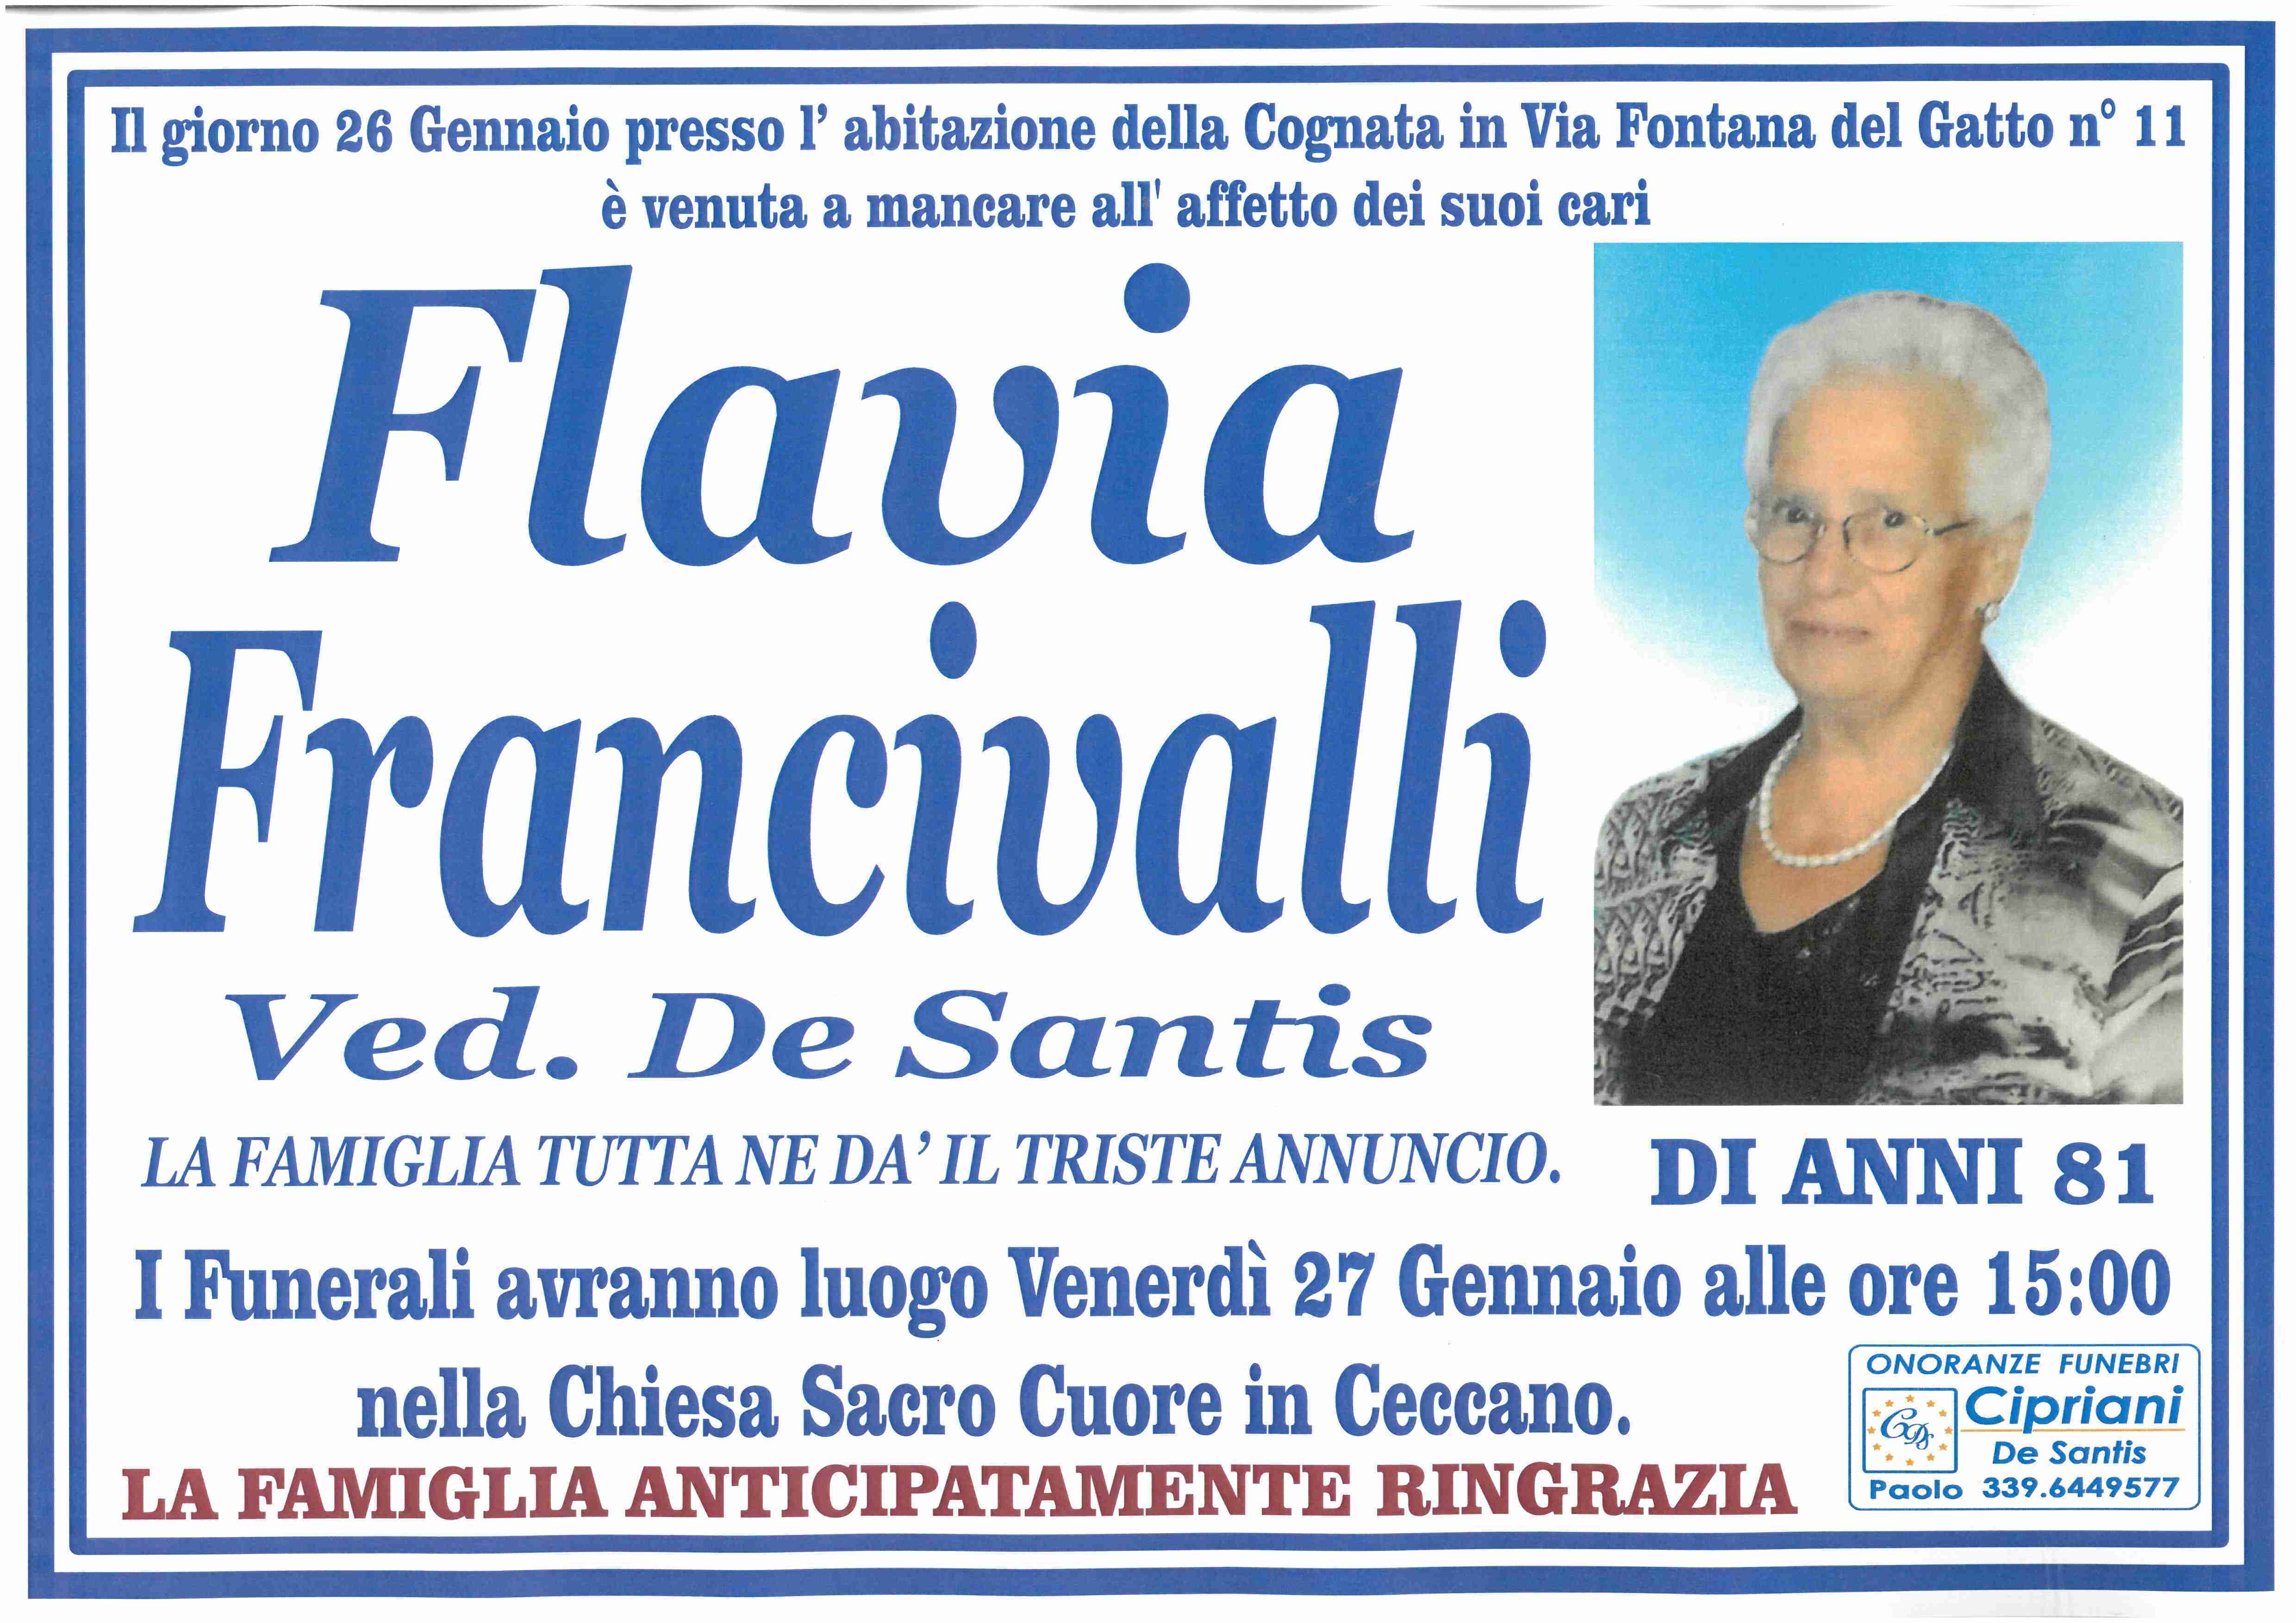 Flavia Francivalli